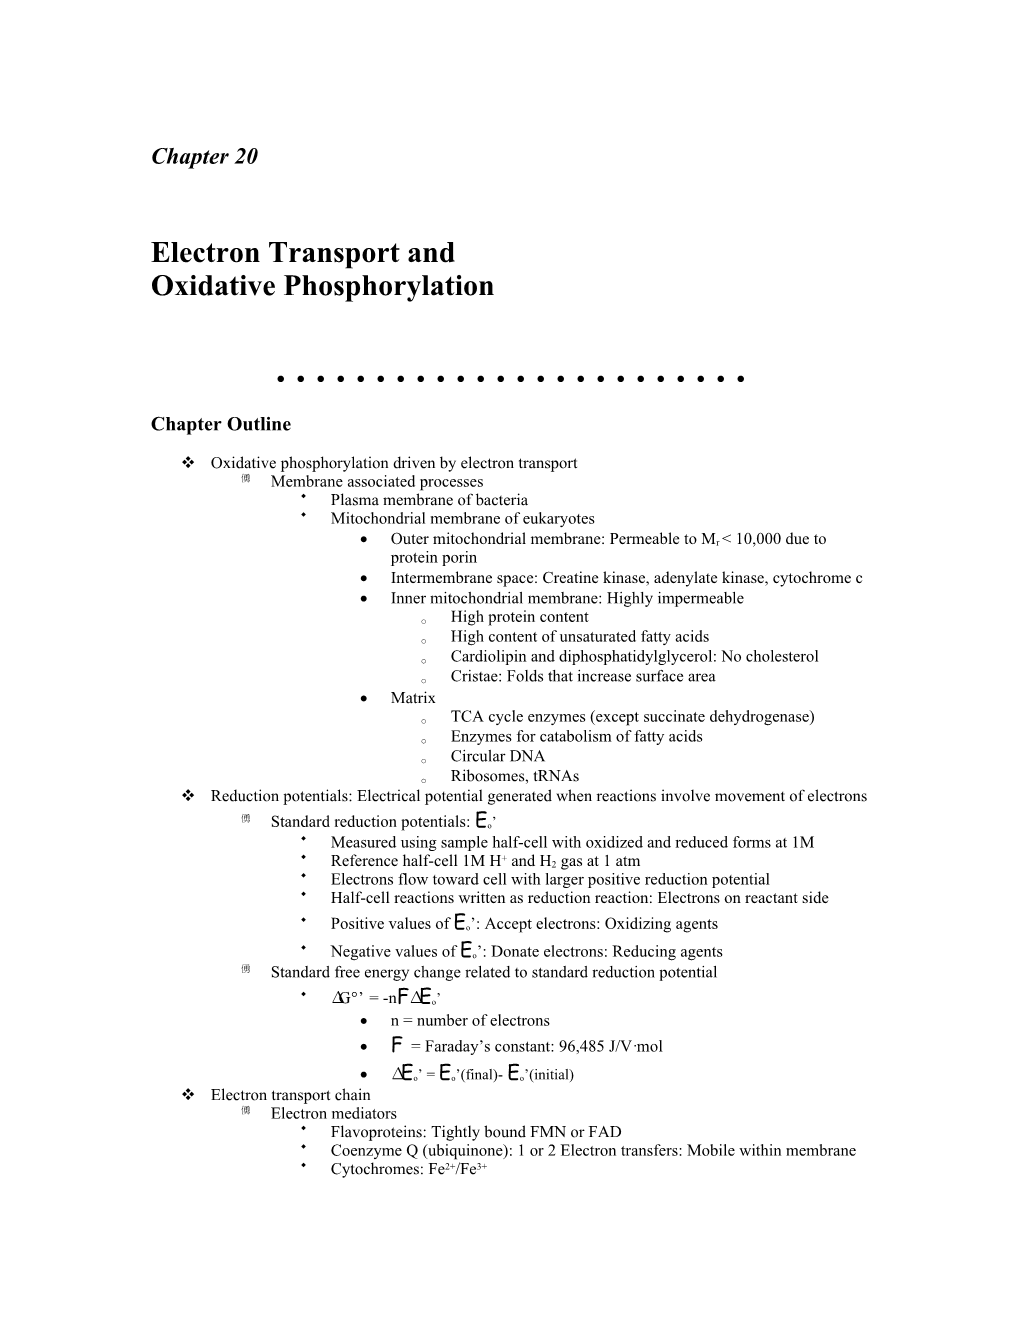 Chapter 20 Electron Transport and Oxidative Phosphorylation